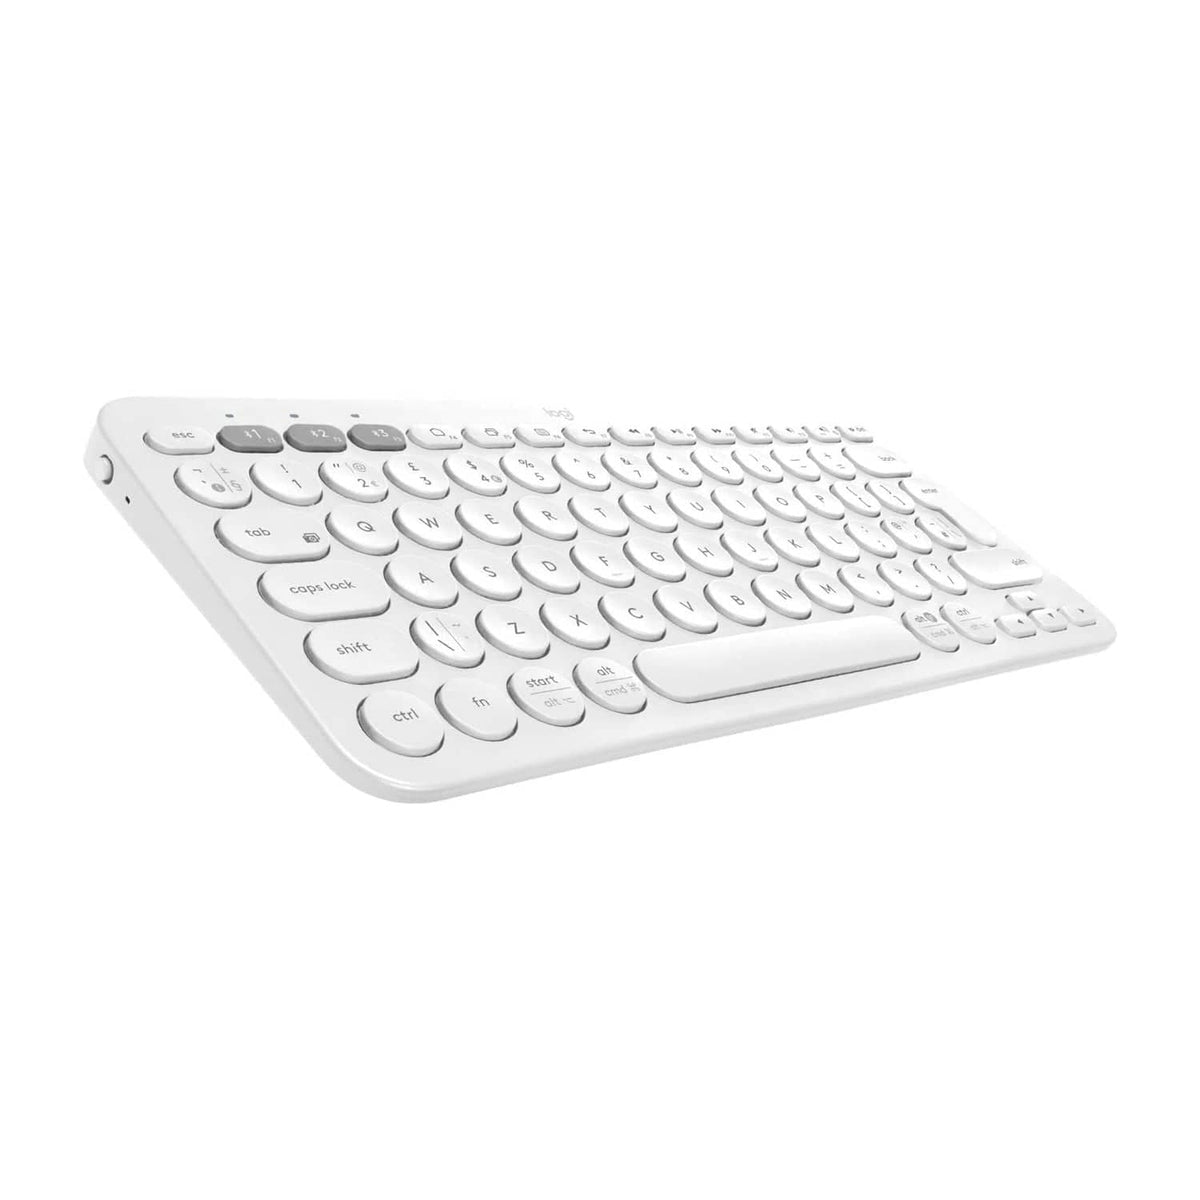 Logitech K380 Multi-Device Bluetooth Keyboard for Mac Off White